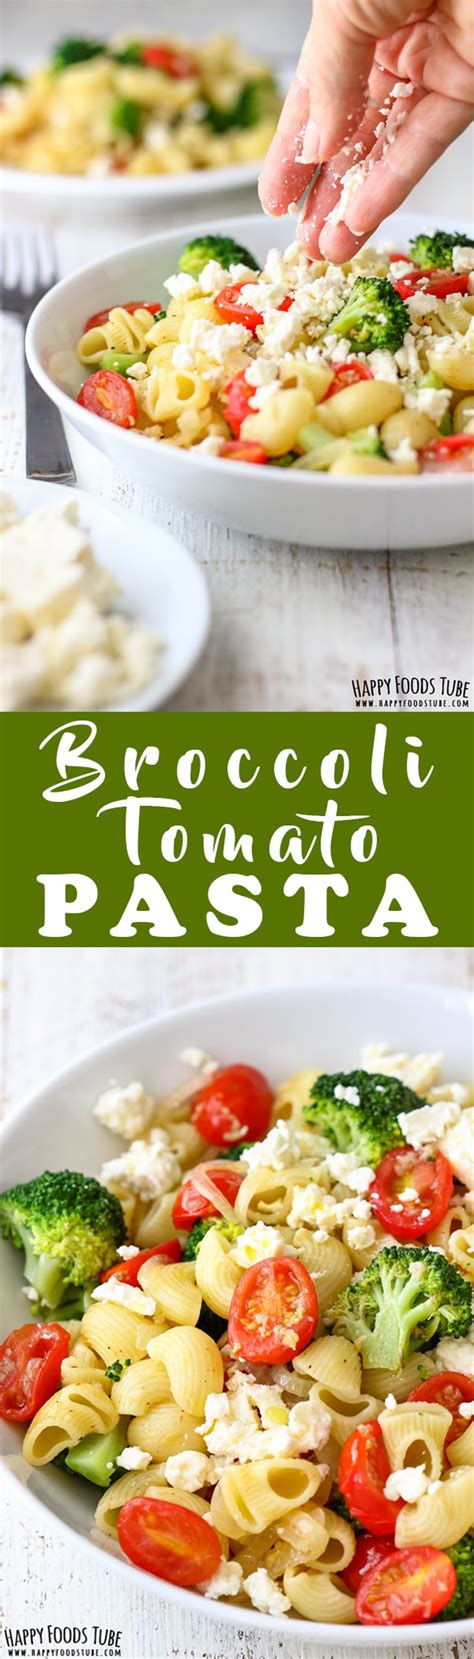 broccoli-tomato-pasta-salad-recipe-happy-foods-tube image